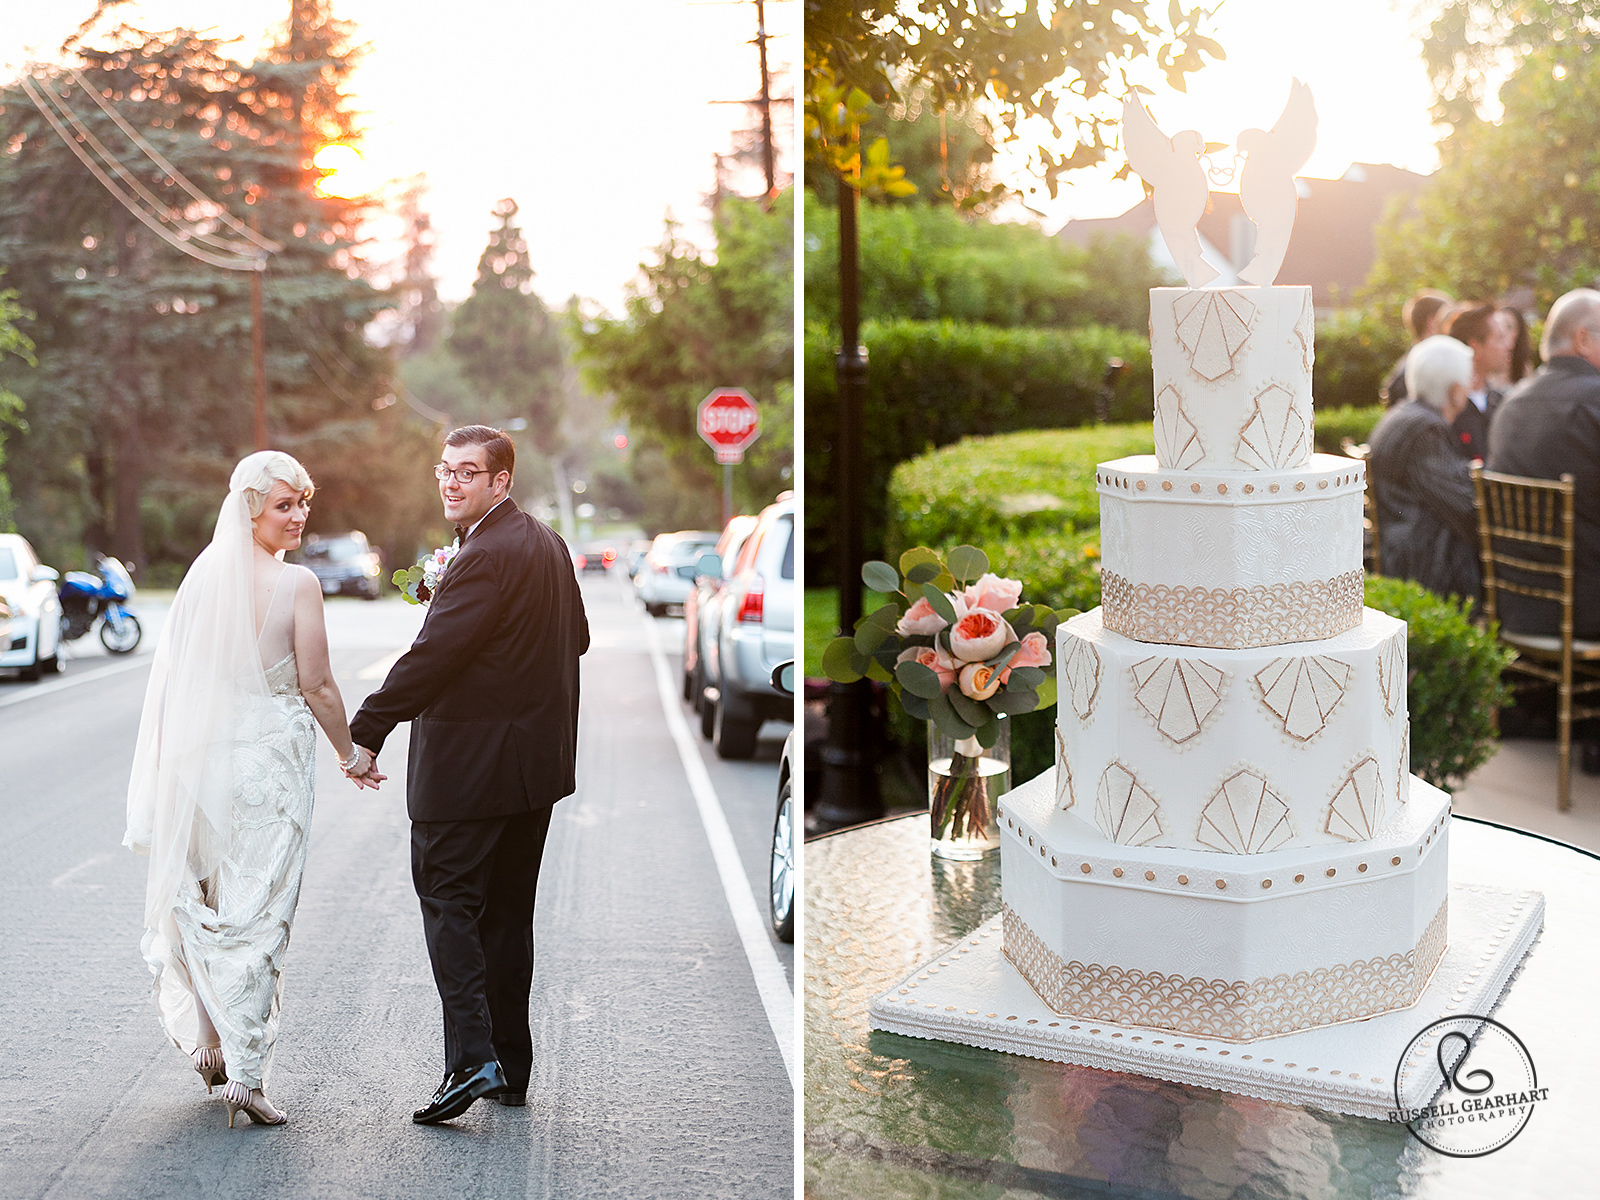 Couple at Sunset - Art Deco Wedding Cake - Backyard Whittier Wedding – Russell Gearhart Photography – www.gearhartphoto.com